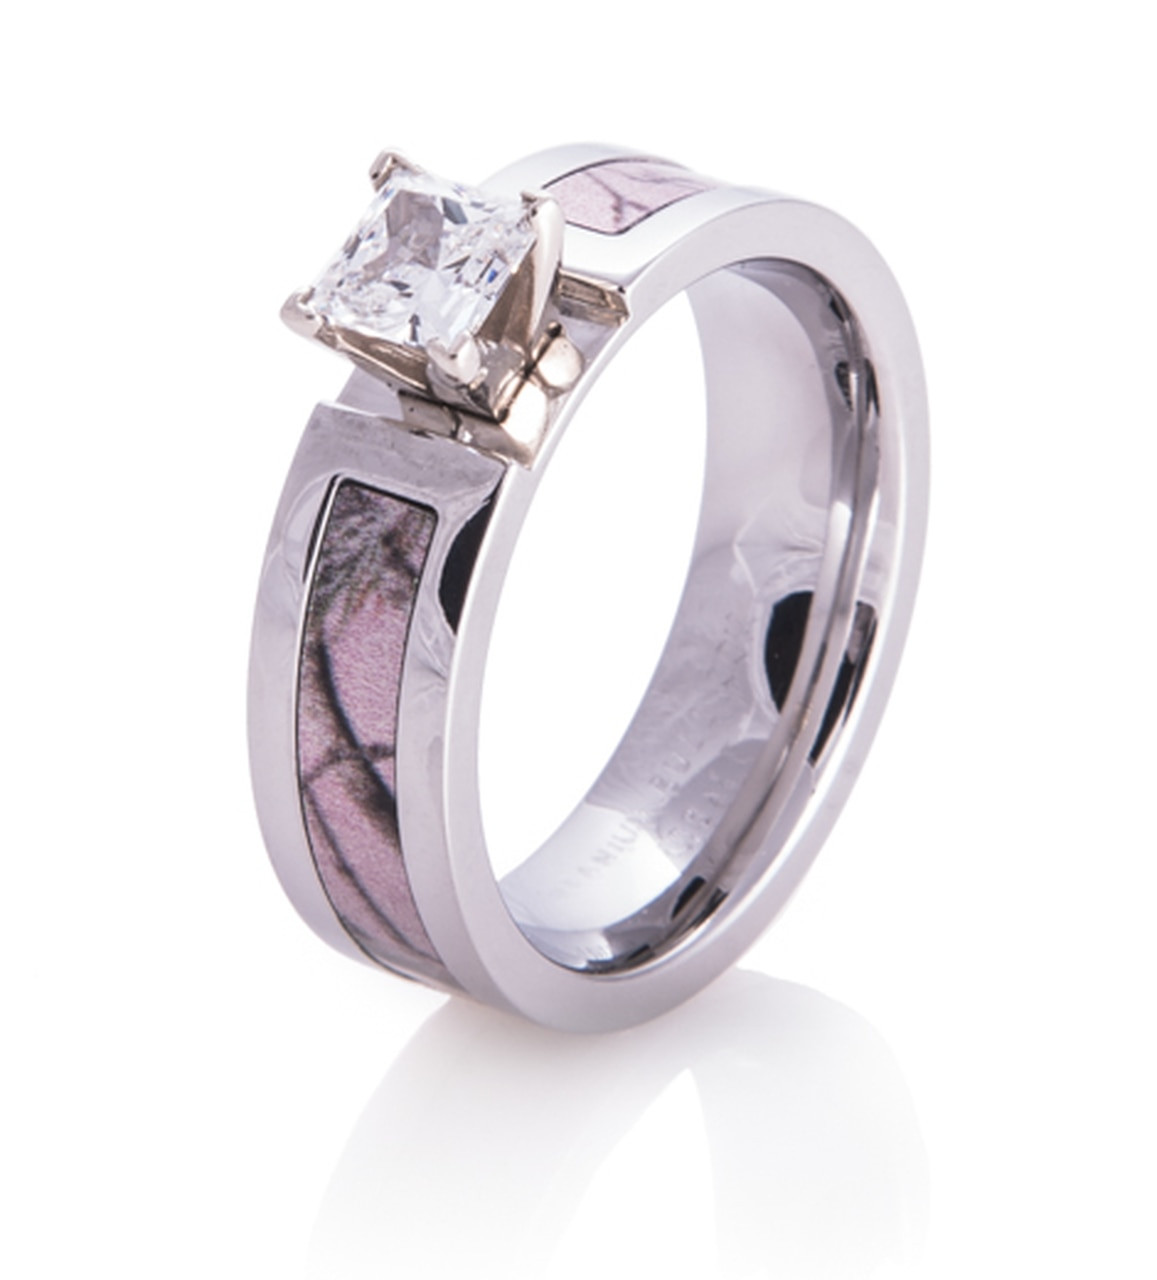 Realtree Camo Wedding Rings
 Realtree AP Pink Camo Engagement Ring Titanium Buzz